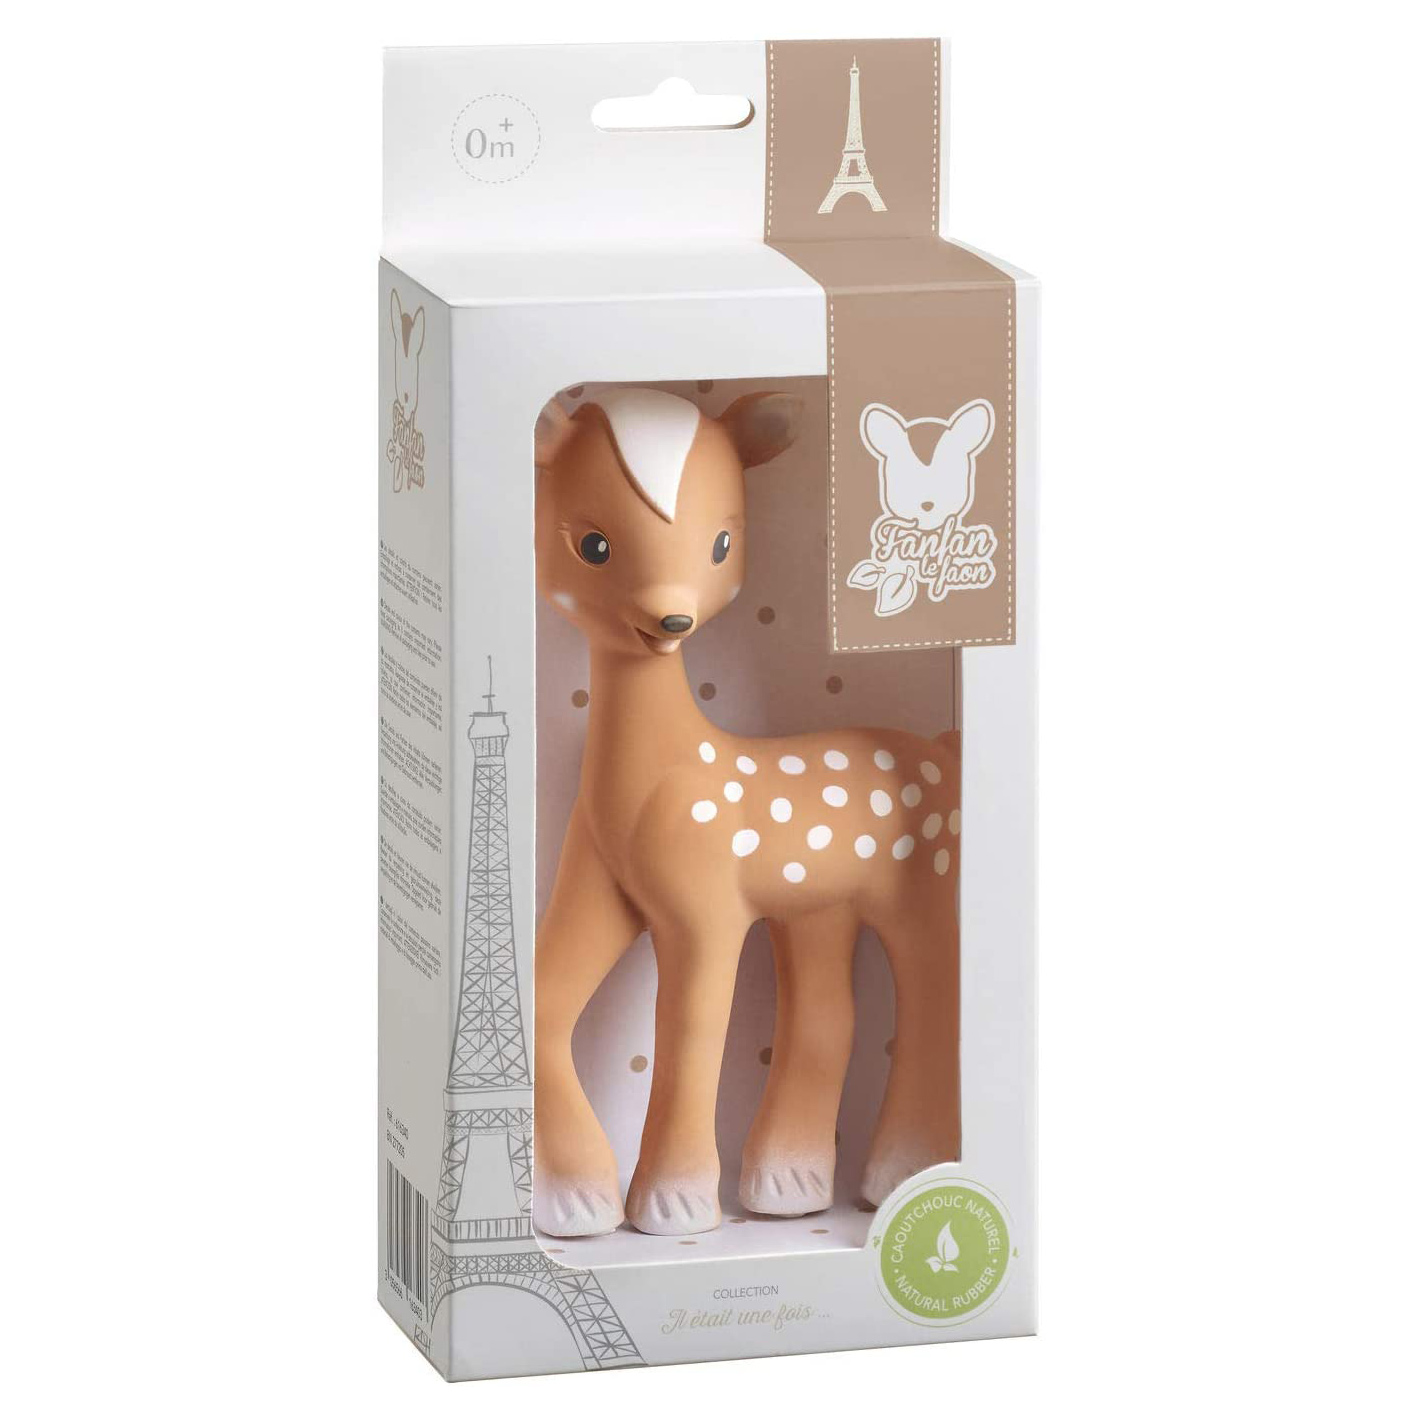 Promo Sophie la girafe coffret naissance chez Intermarché